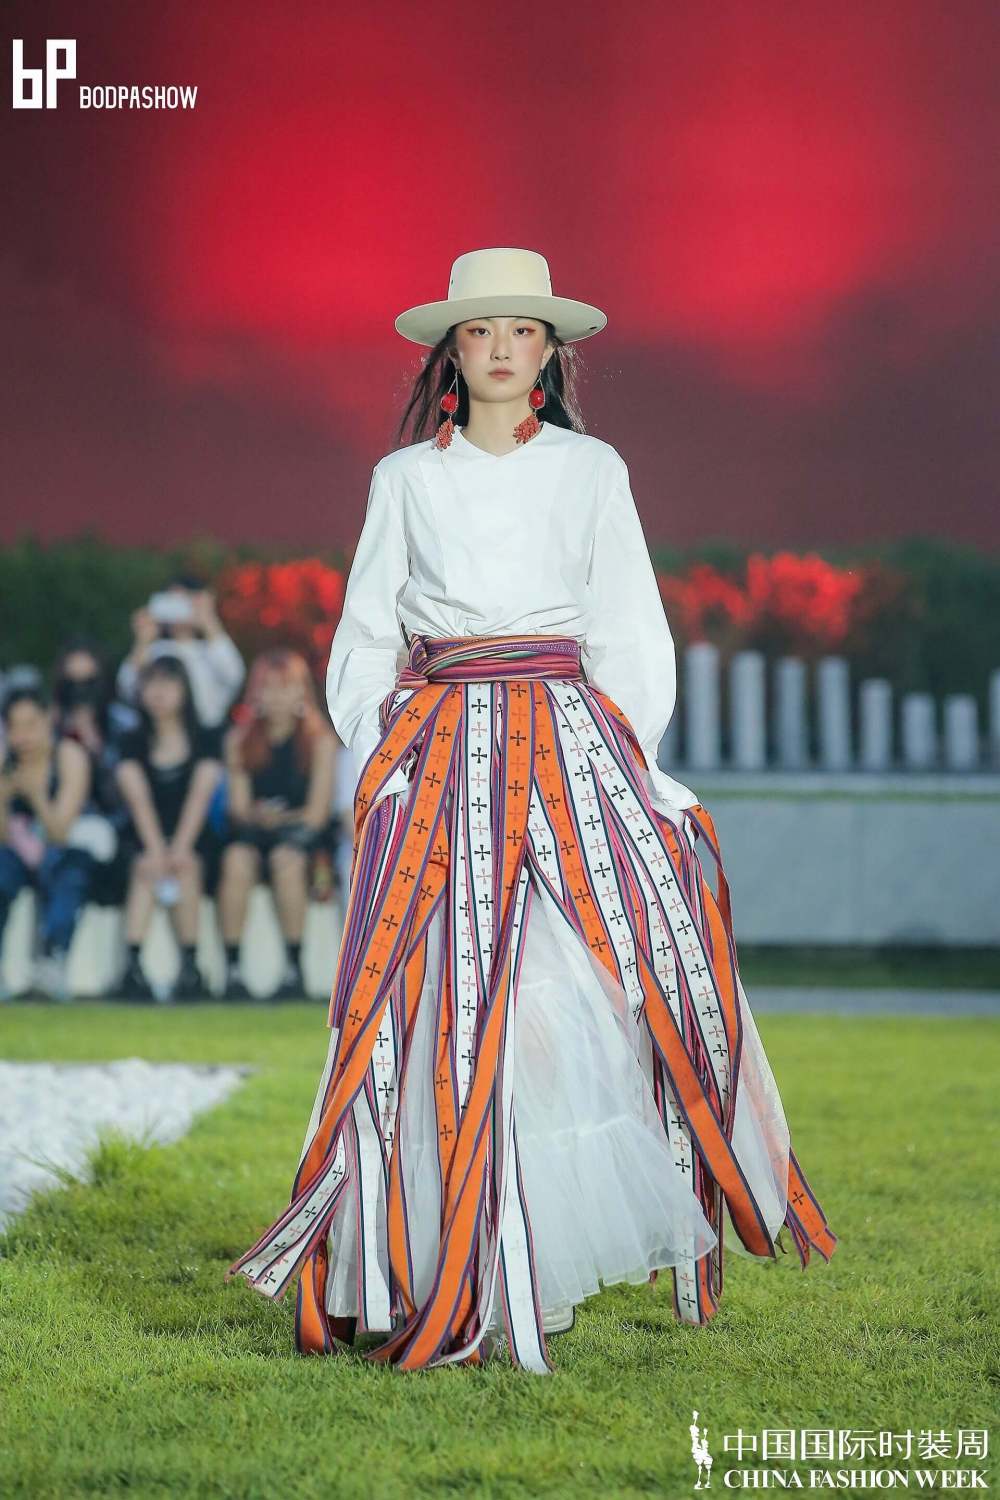 BODPASHOW China Fashion Week 2022